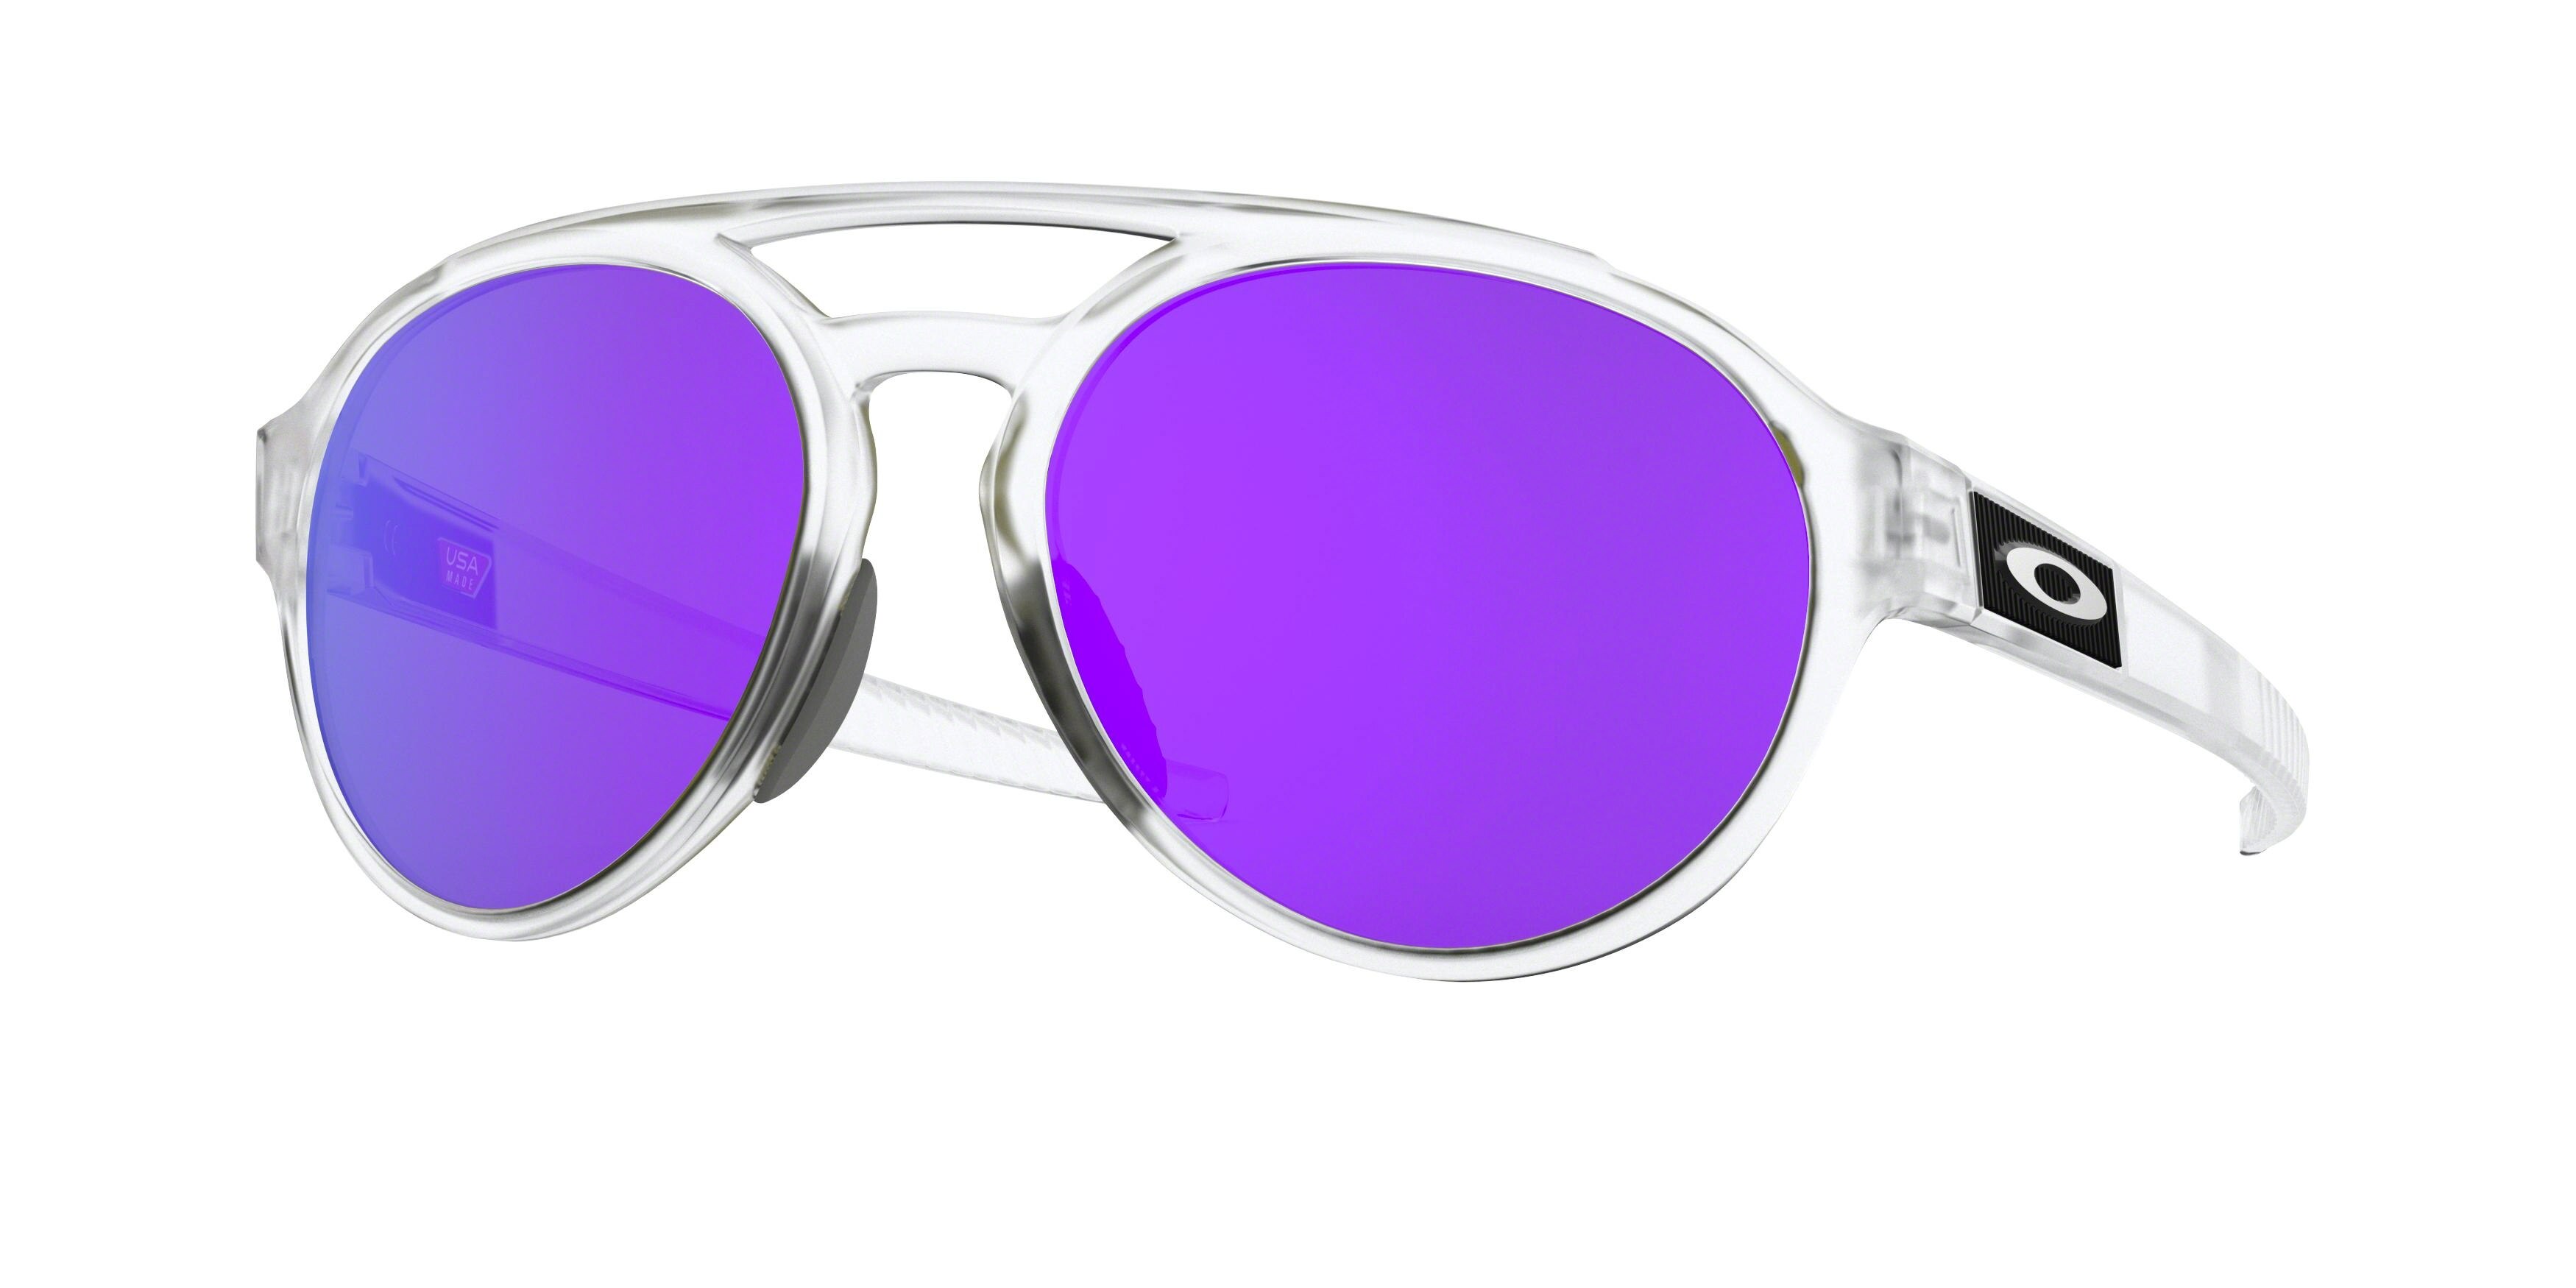  violet iridium/matte clear